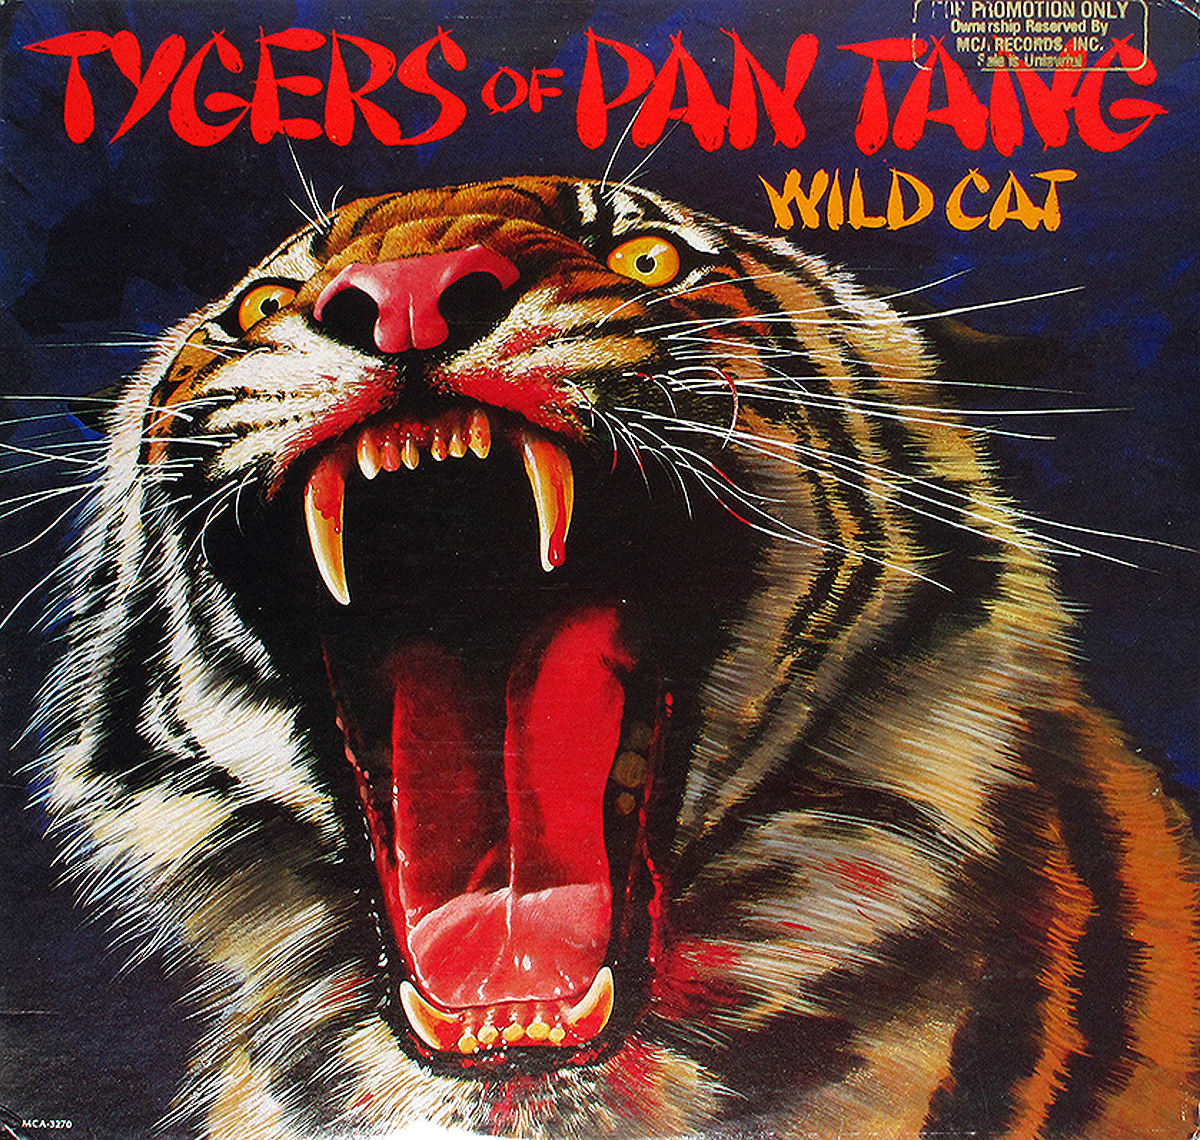 large album front cover photo of: TYGERS OF PAN TANG - Wild Cat Promo 12" Vinyl LP Album